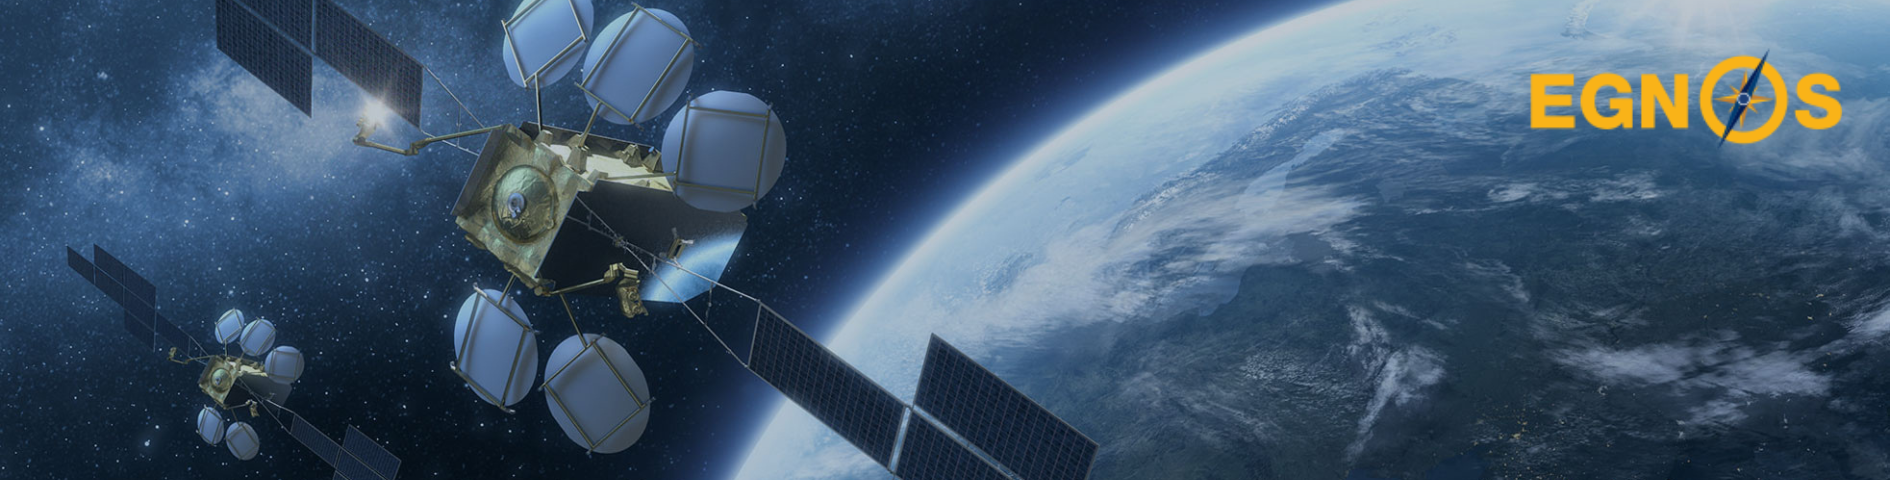 EGNOS, Europe's Regional Satellite Navigation System